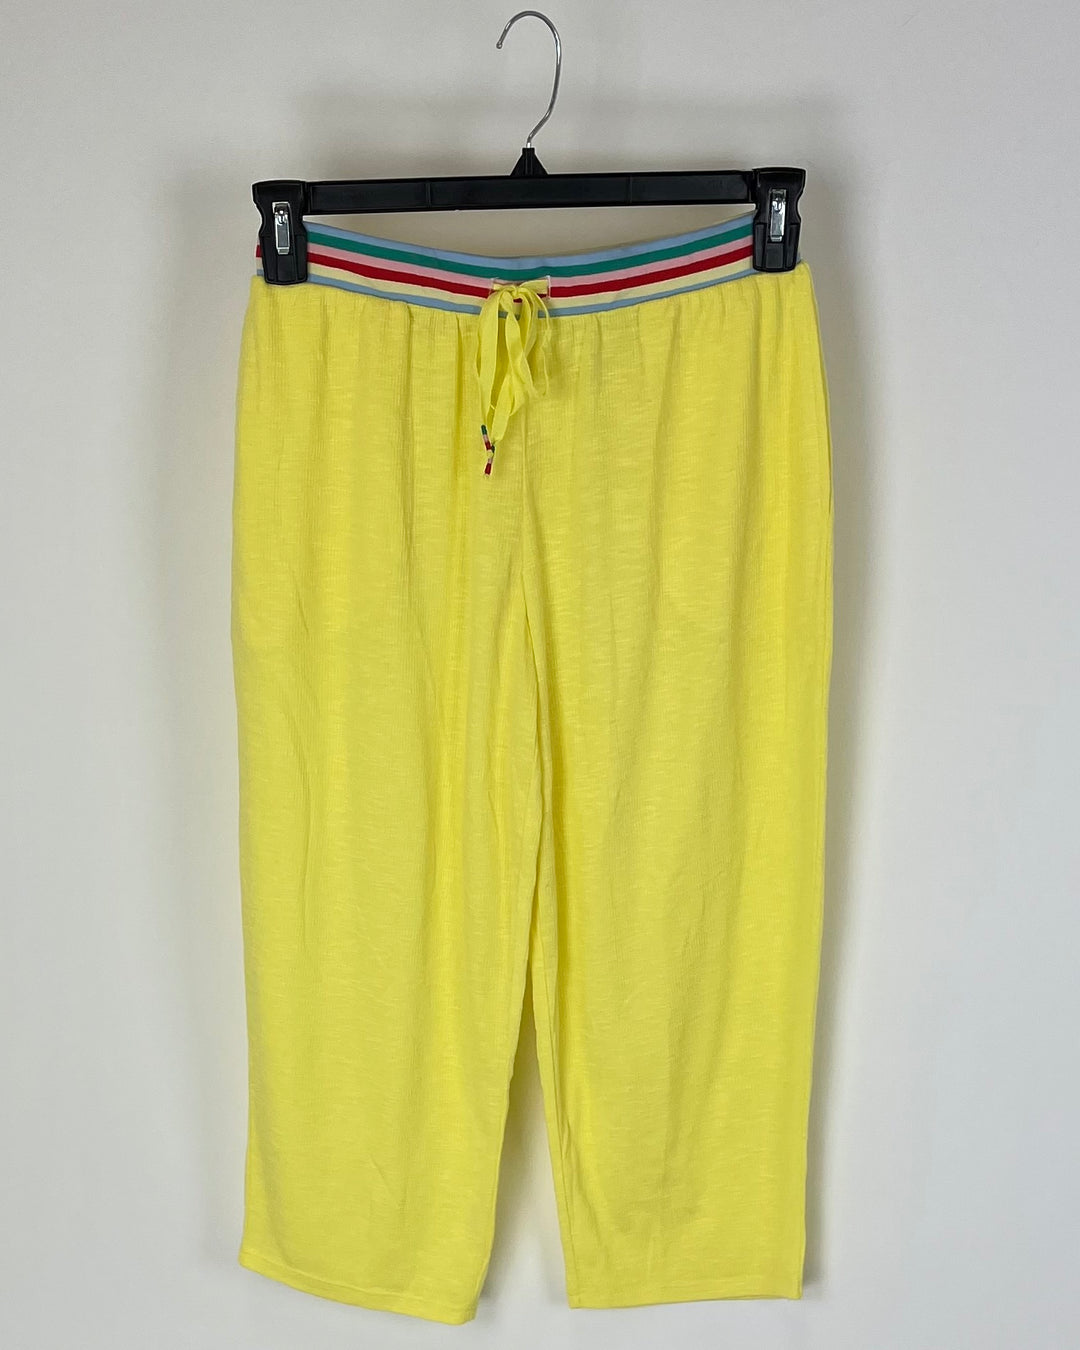 Yellow Cropped Lounge Pants - Size 2/4